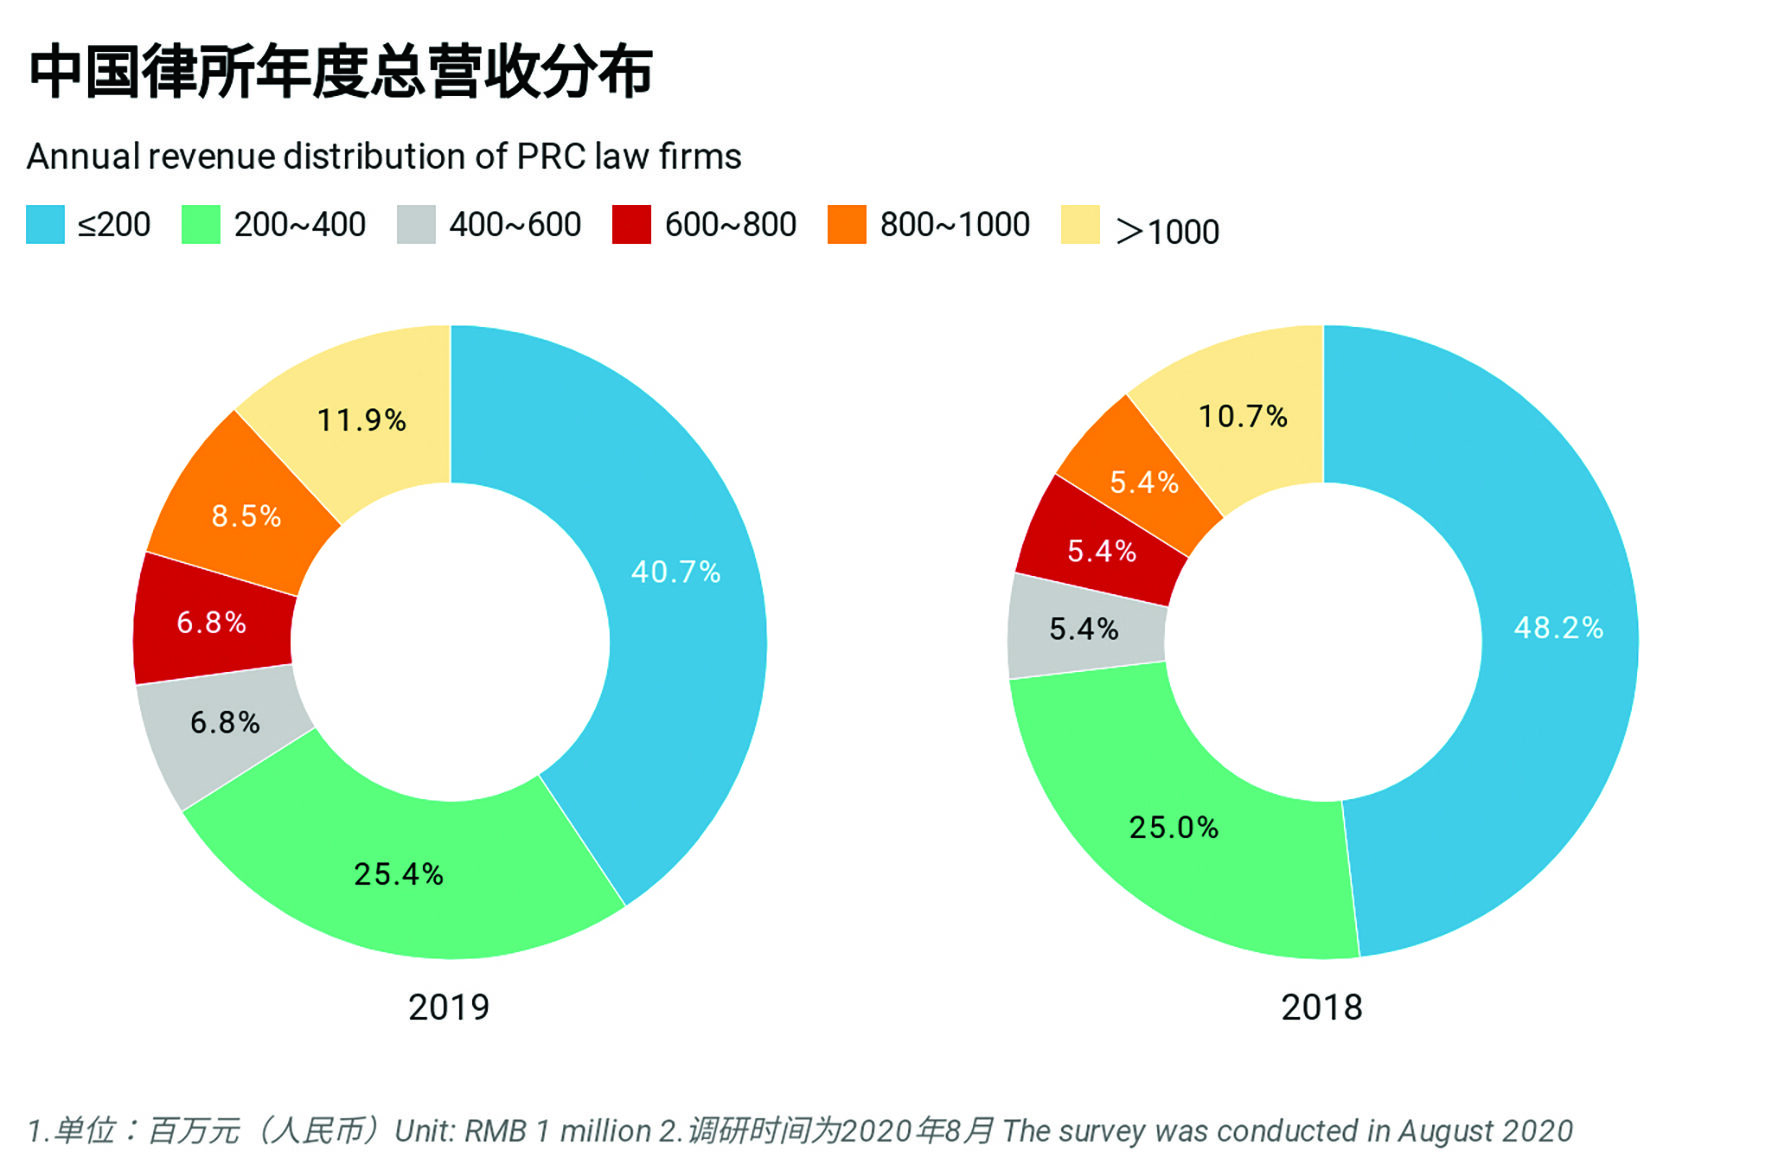 Annual revenue distribution of PRC law firms